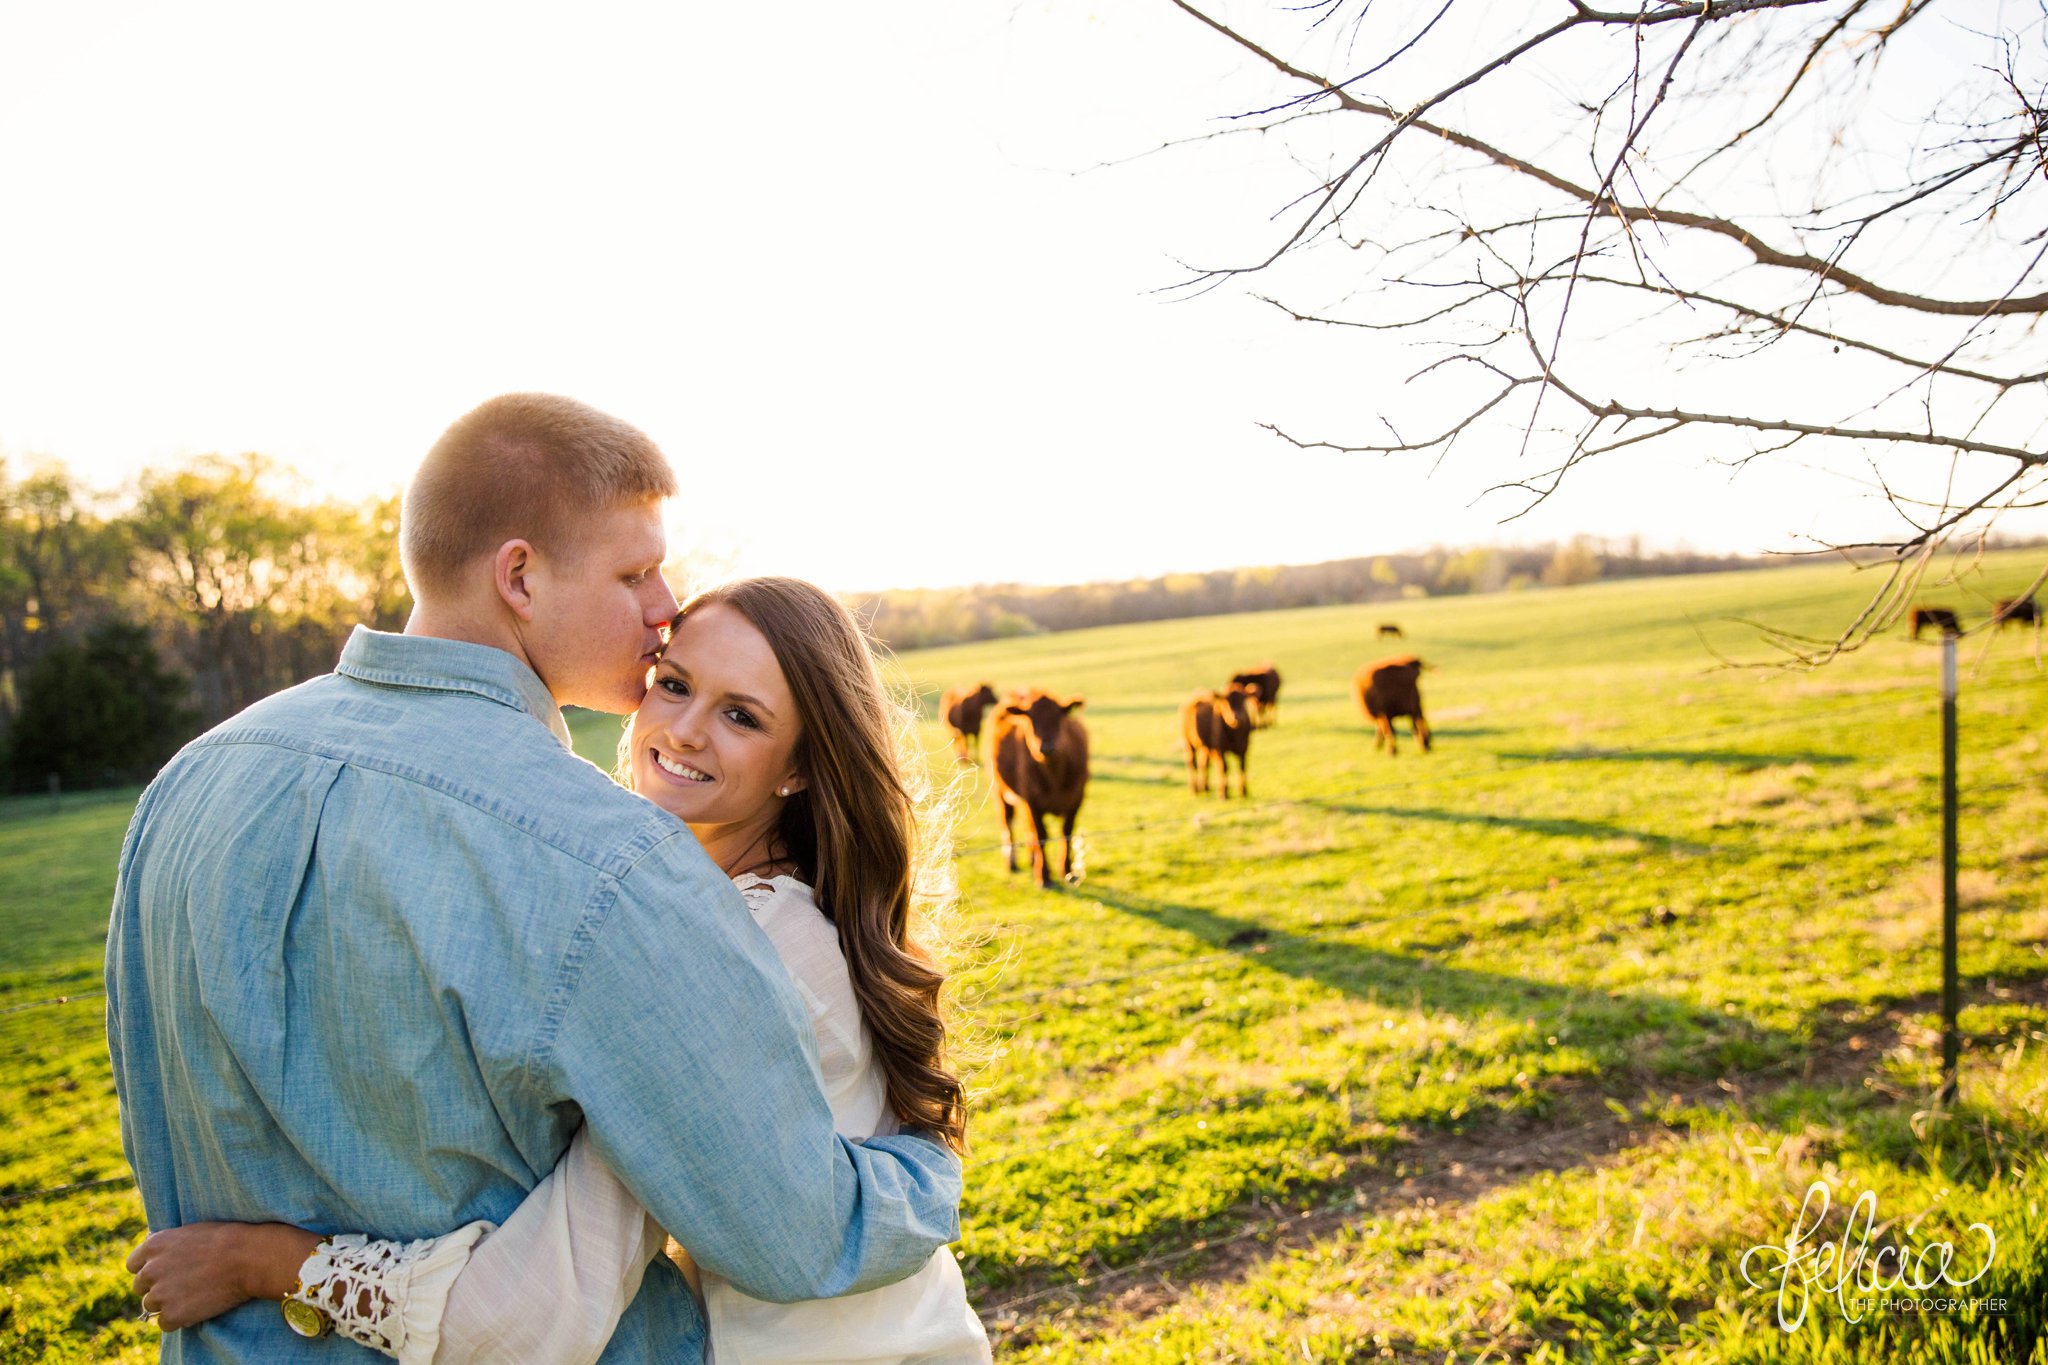 Kansas City Romantic Engagement Photos | Farm Photography | Images by www.feliciathephotographer.com